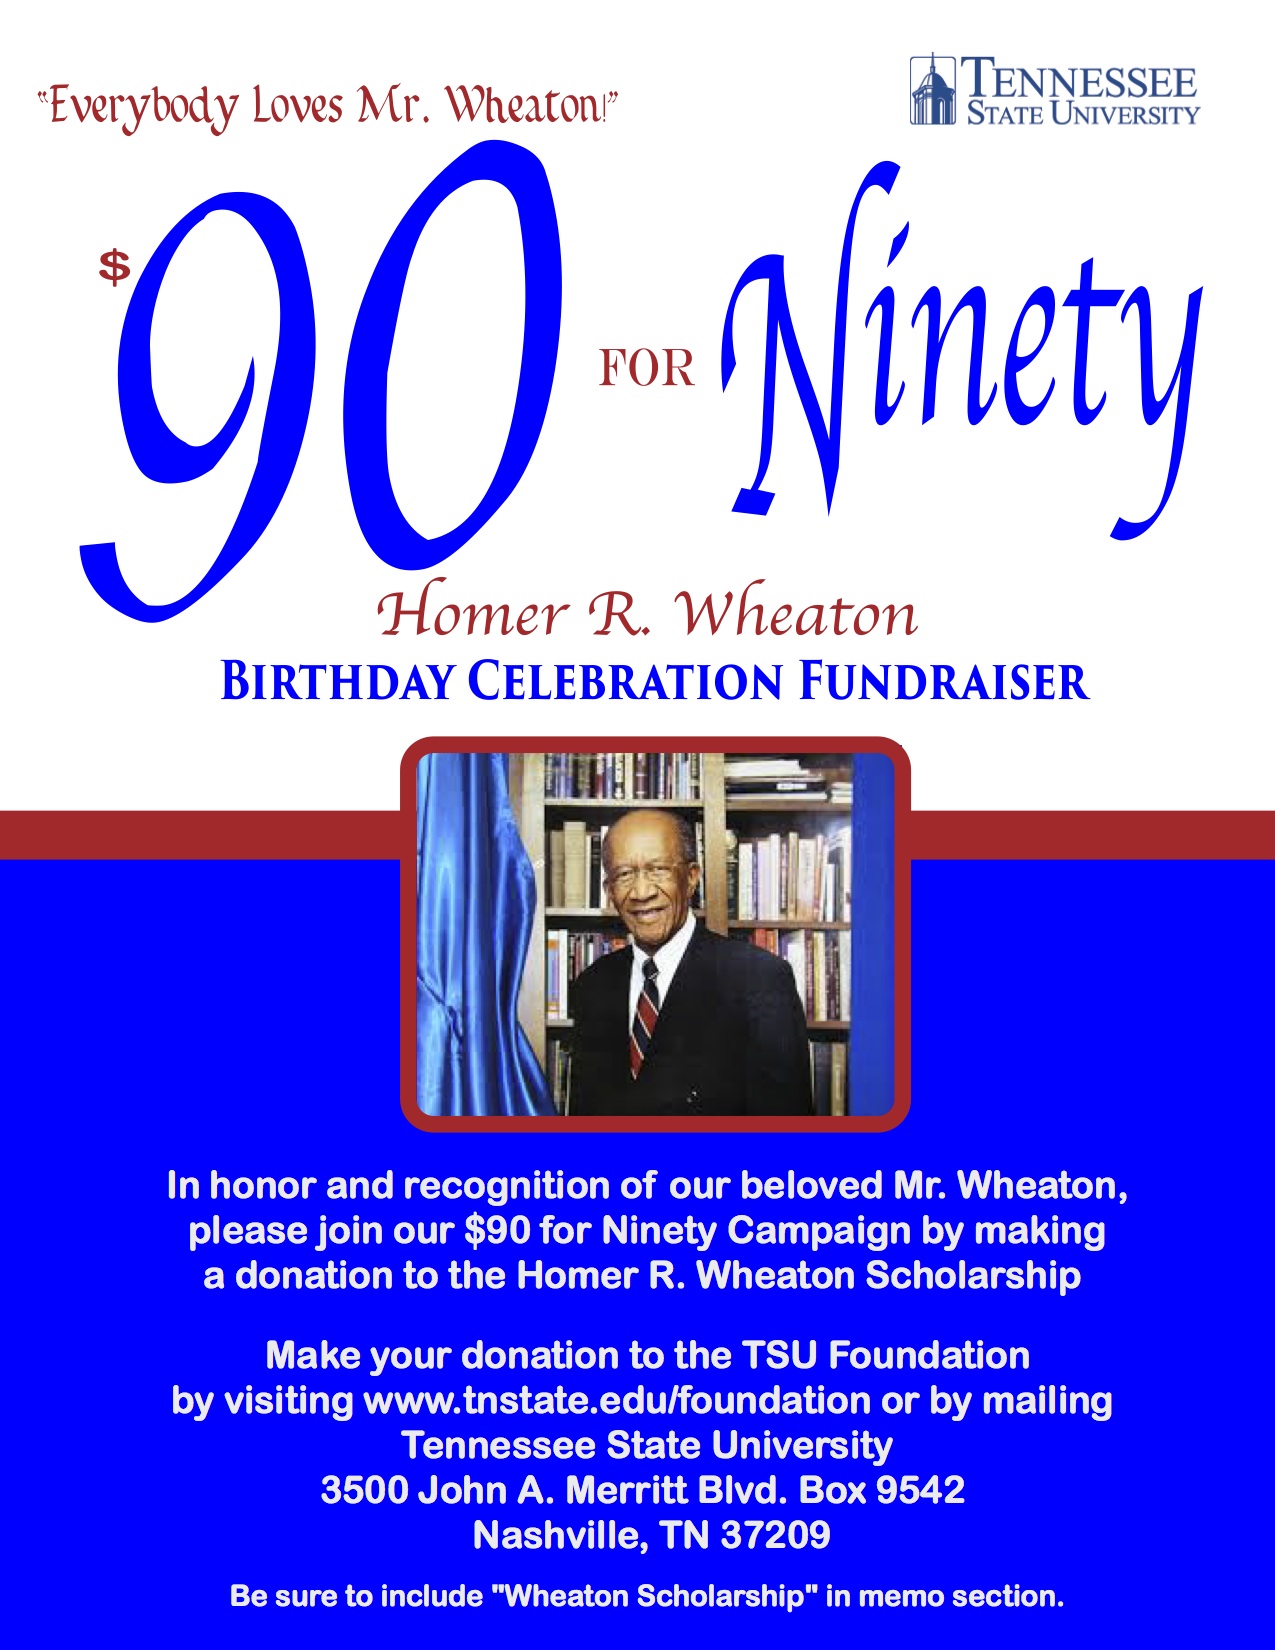 $90 for Ninety - Homer Wheaton Birthday Fundraiser